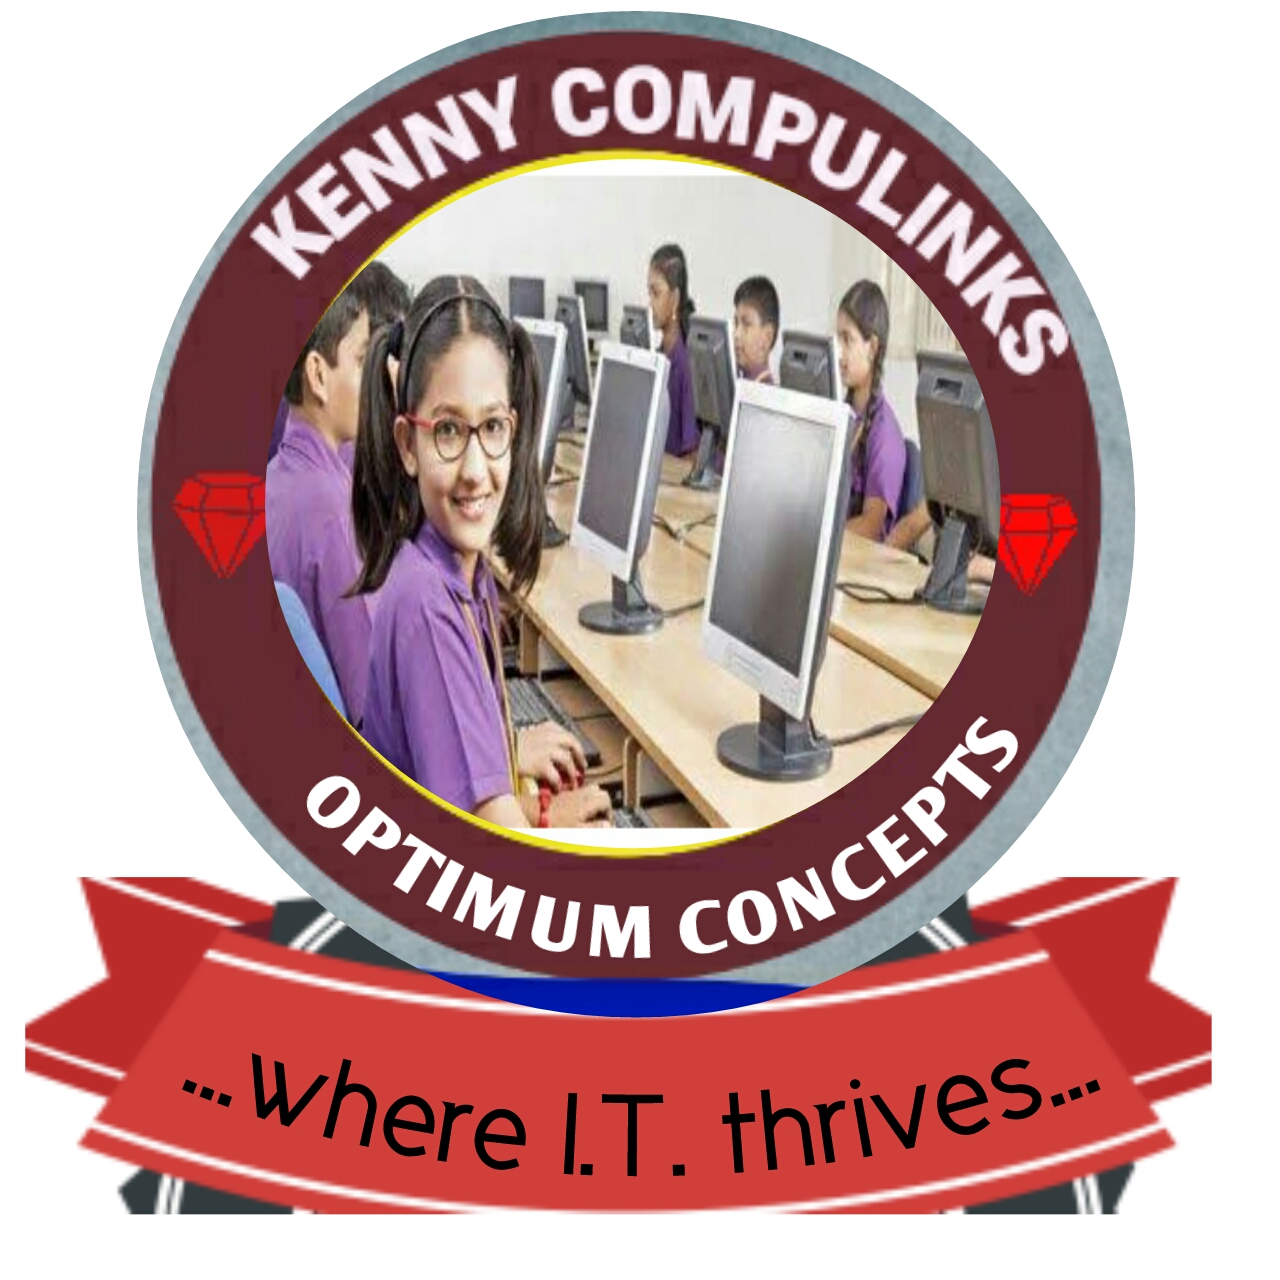 Kenny Compulinks Optimum Concepts